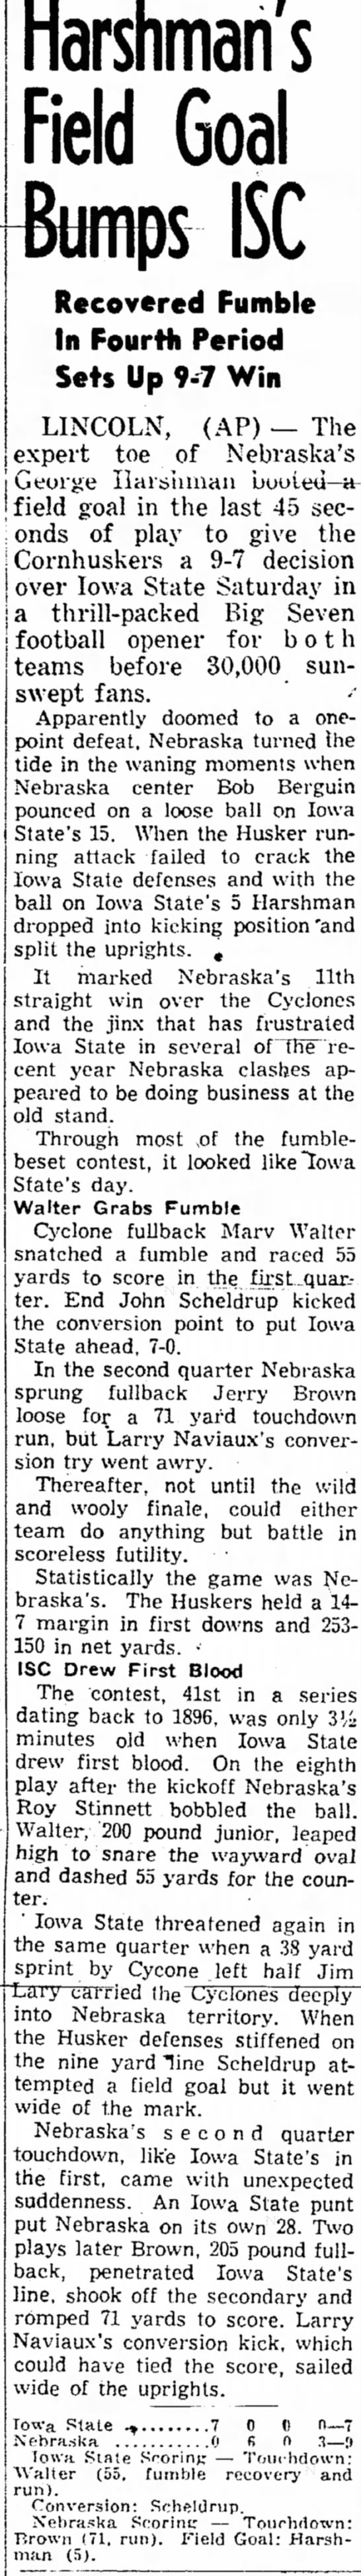 1956 Nebraska-Iowa State, AP - 